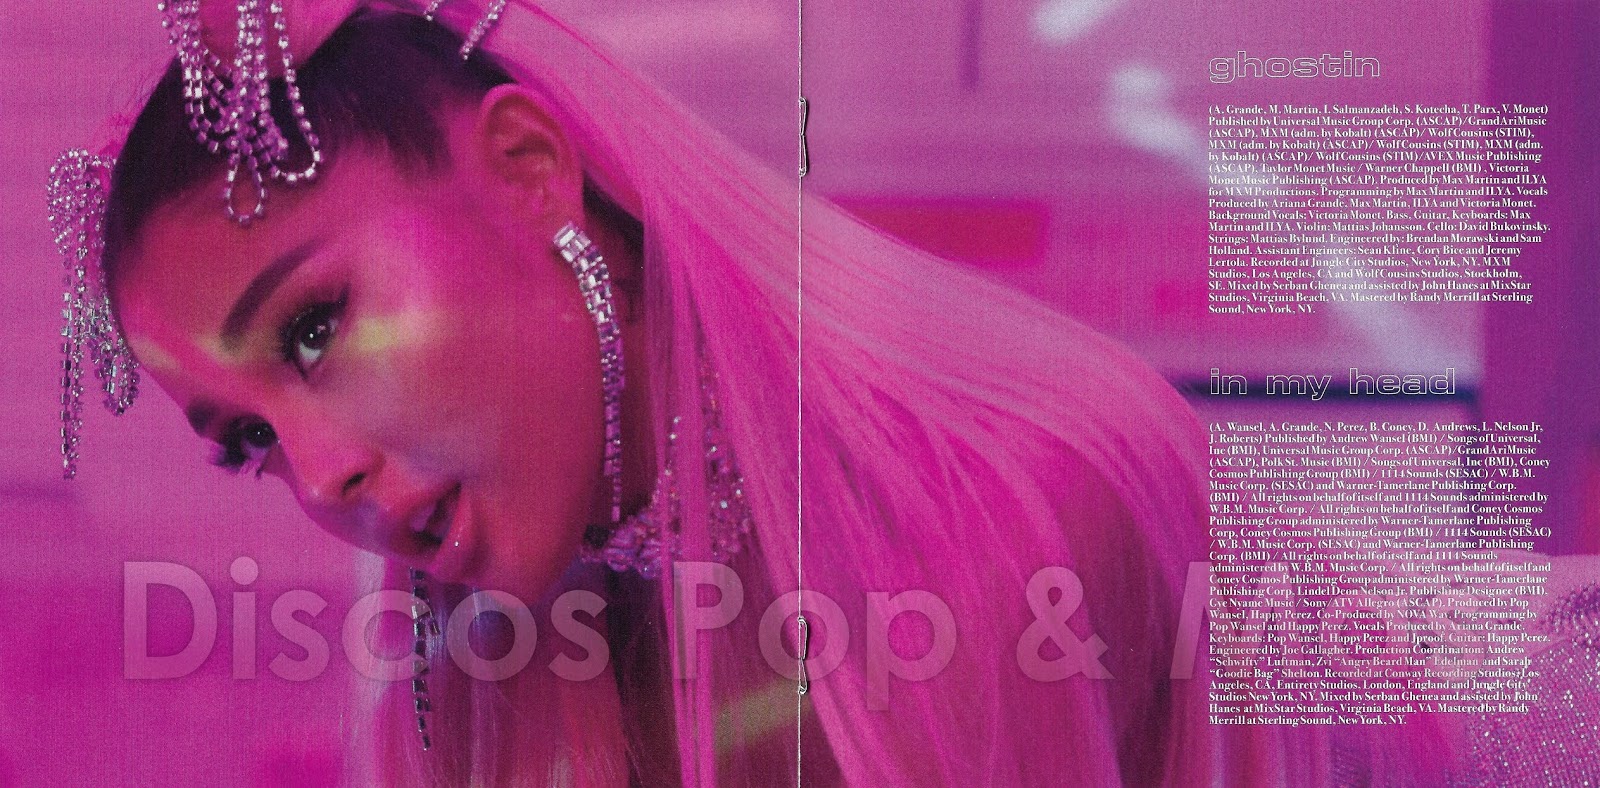 Discos Pop & Mas: Ariana Grande - Thank U, Next (Japanese Deluxe Edition)